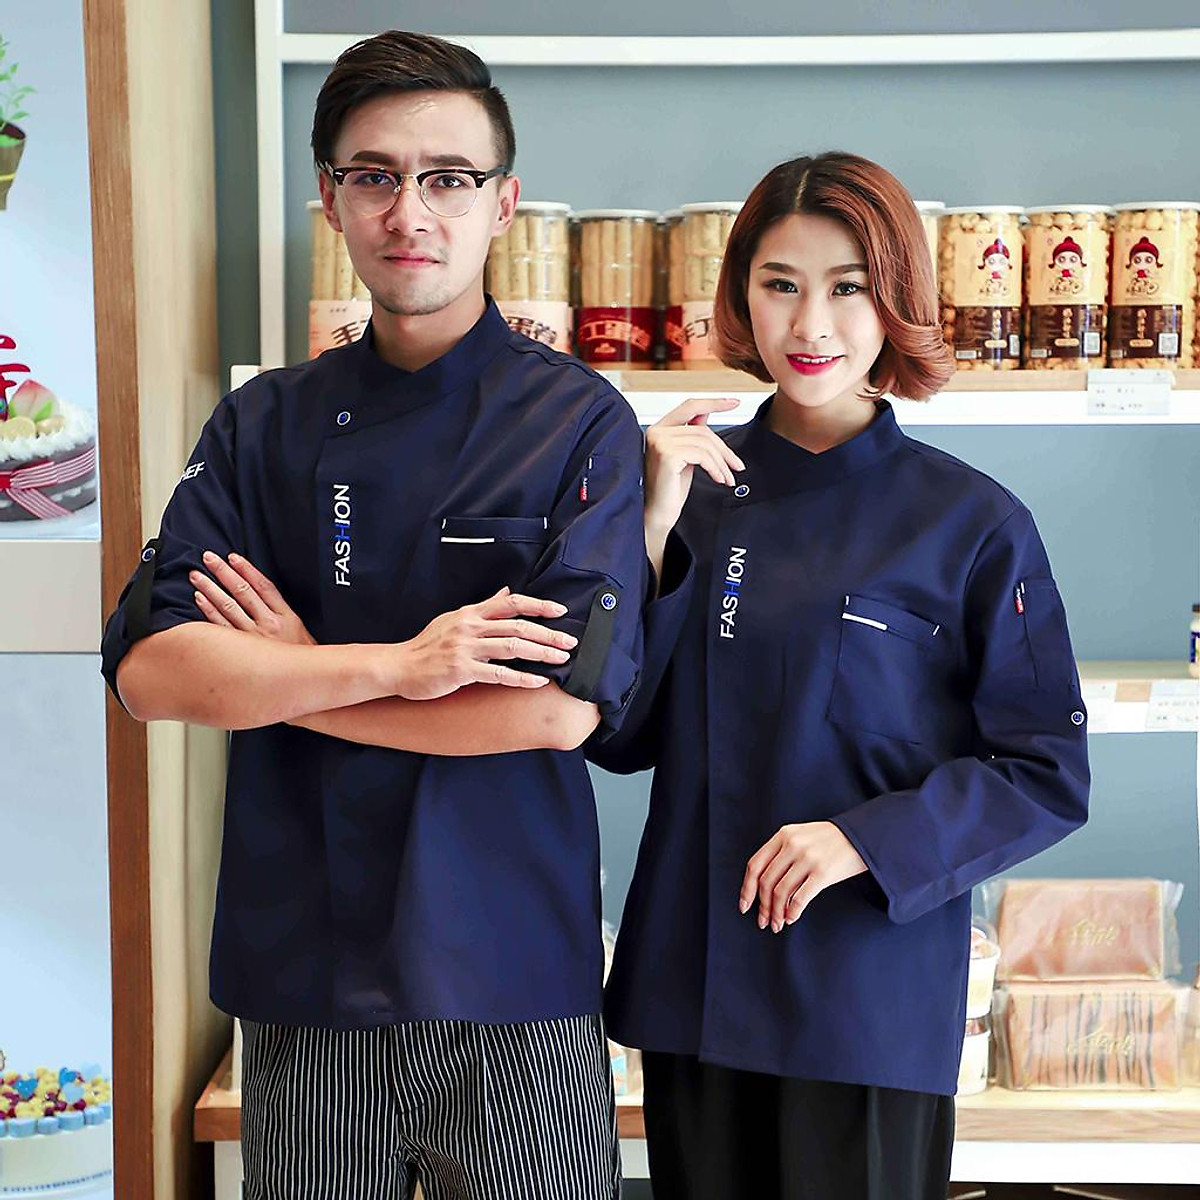 Fashion Chef Jacket Coat Kitchen Uniform Long Sleeves for Women Men 